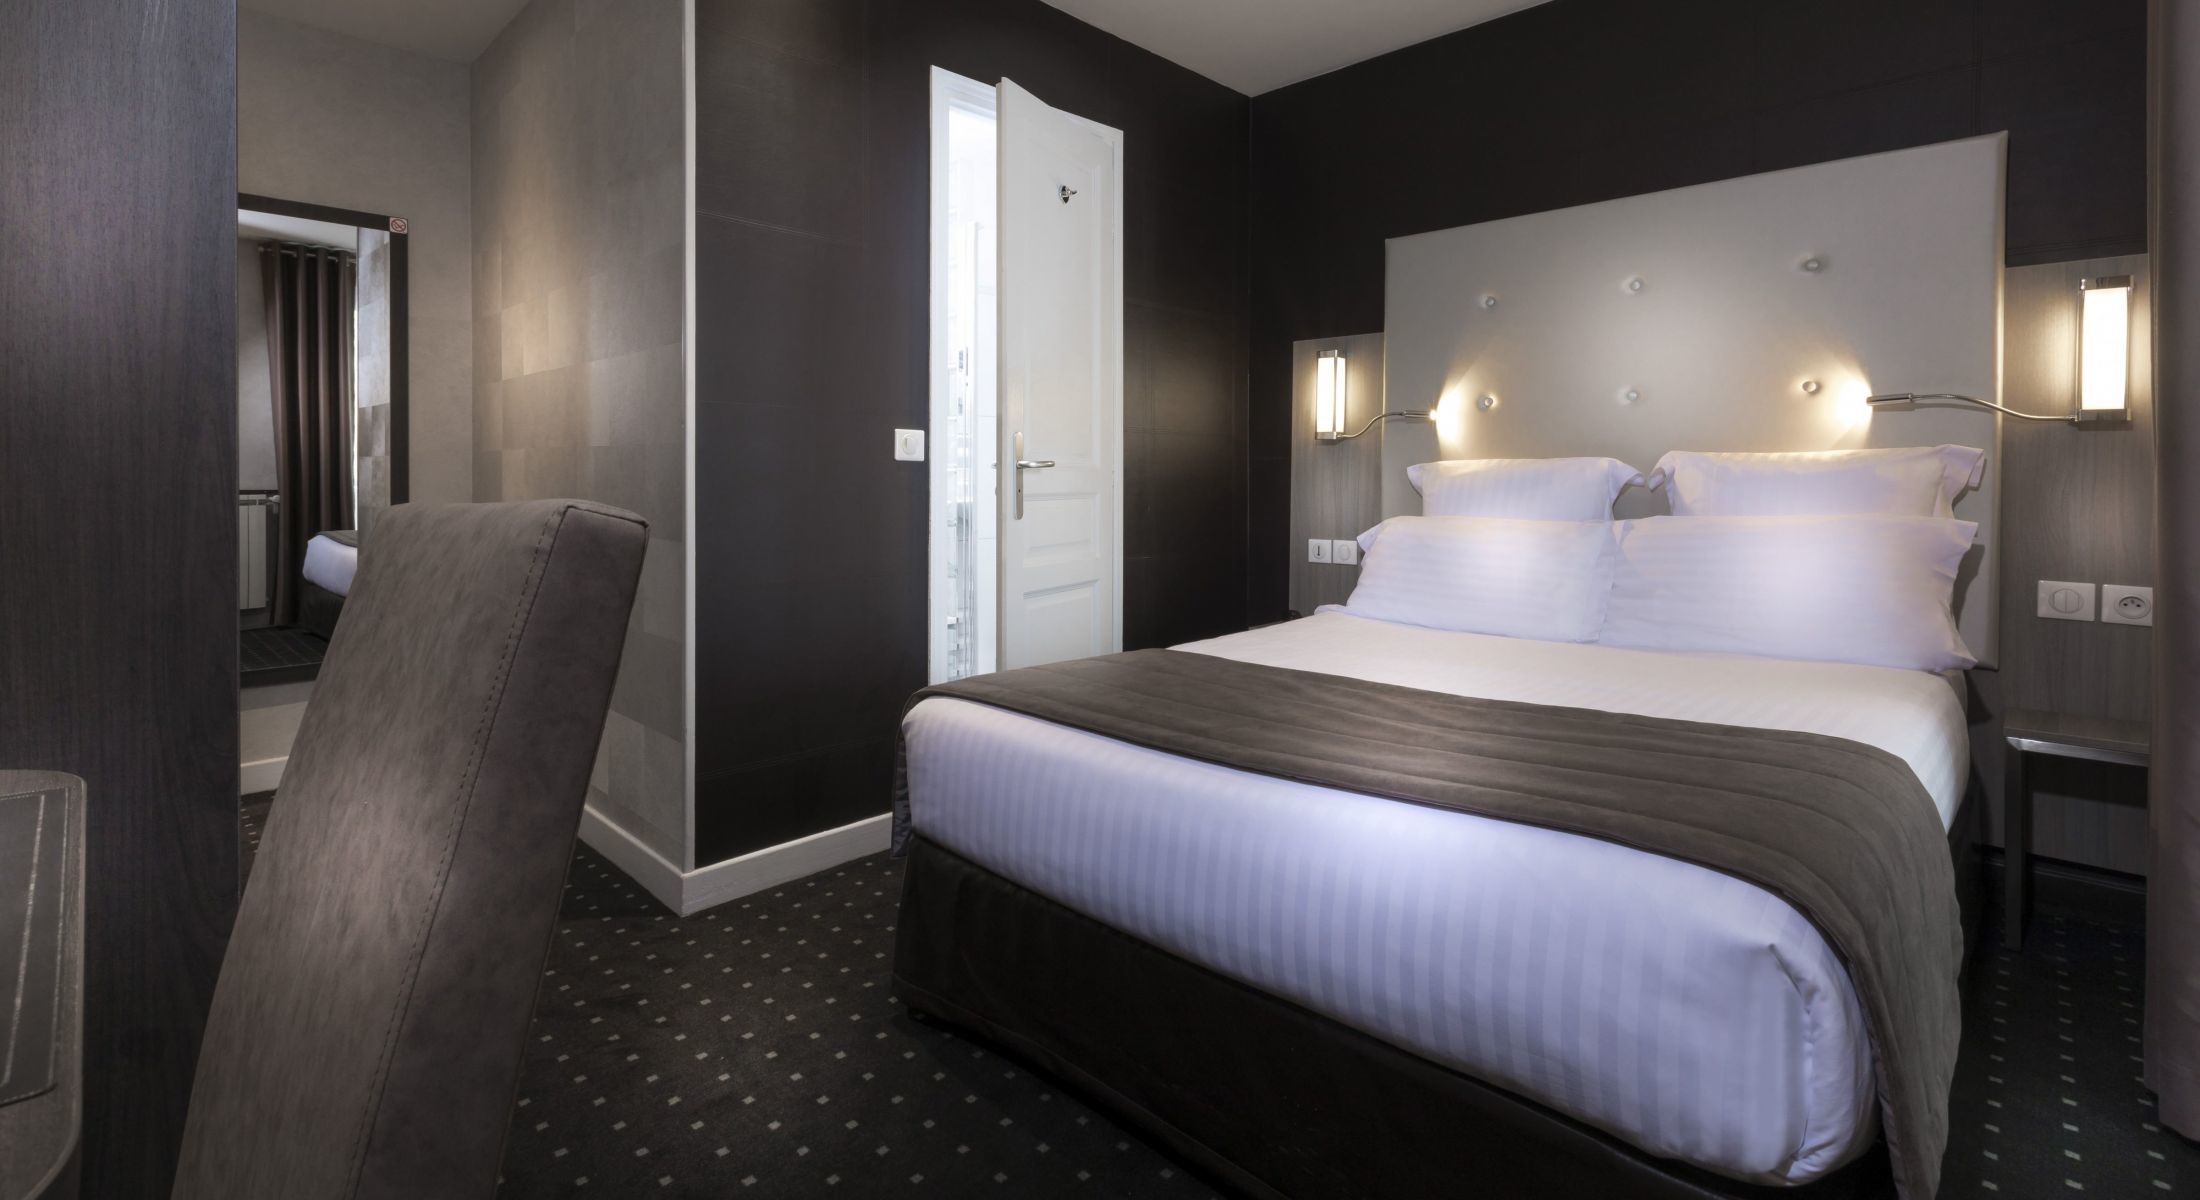 Hotel De La Paix Tour Eiffel - Comfort Adjoining Room